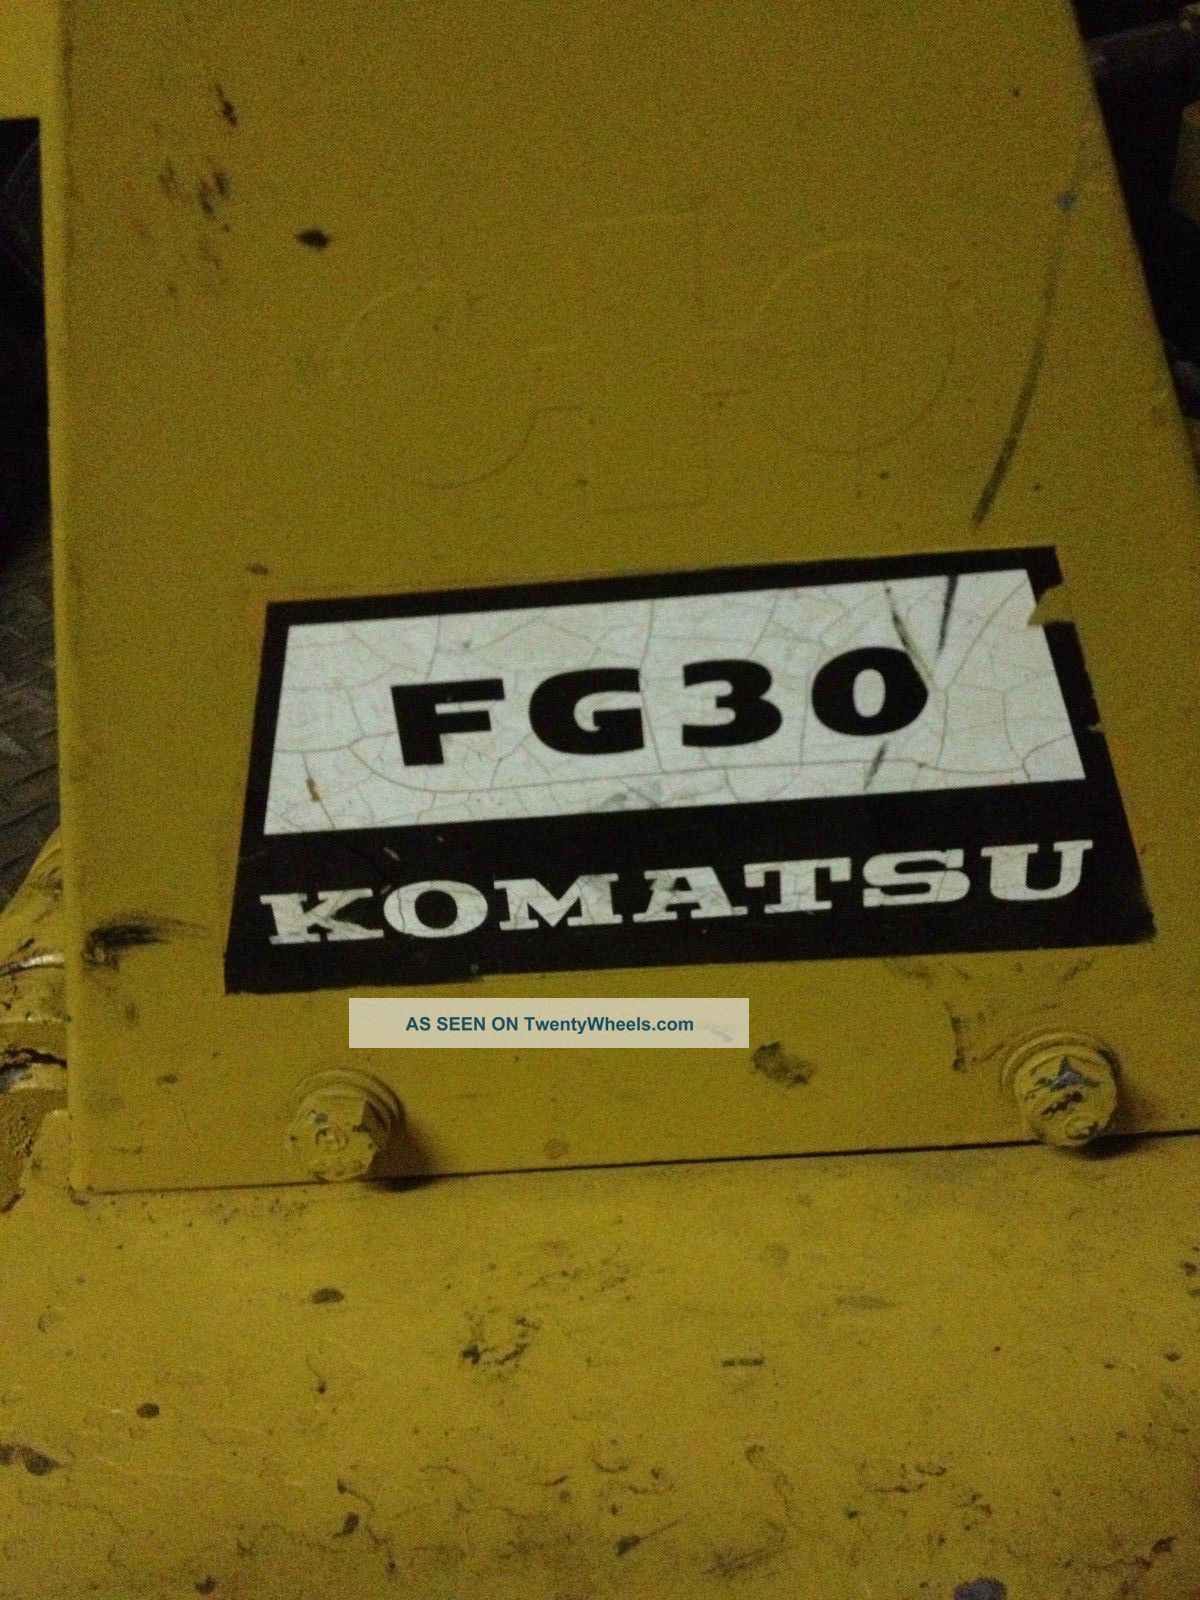 Komatsu forklift nissan engines #4